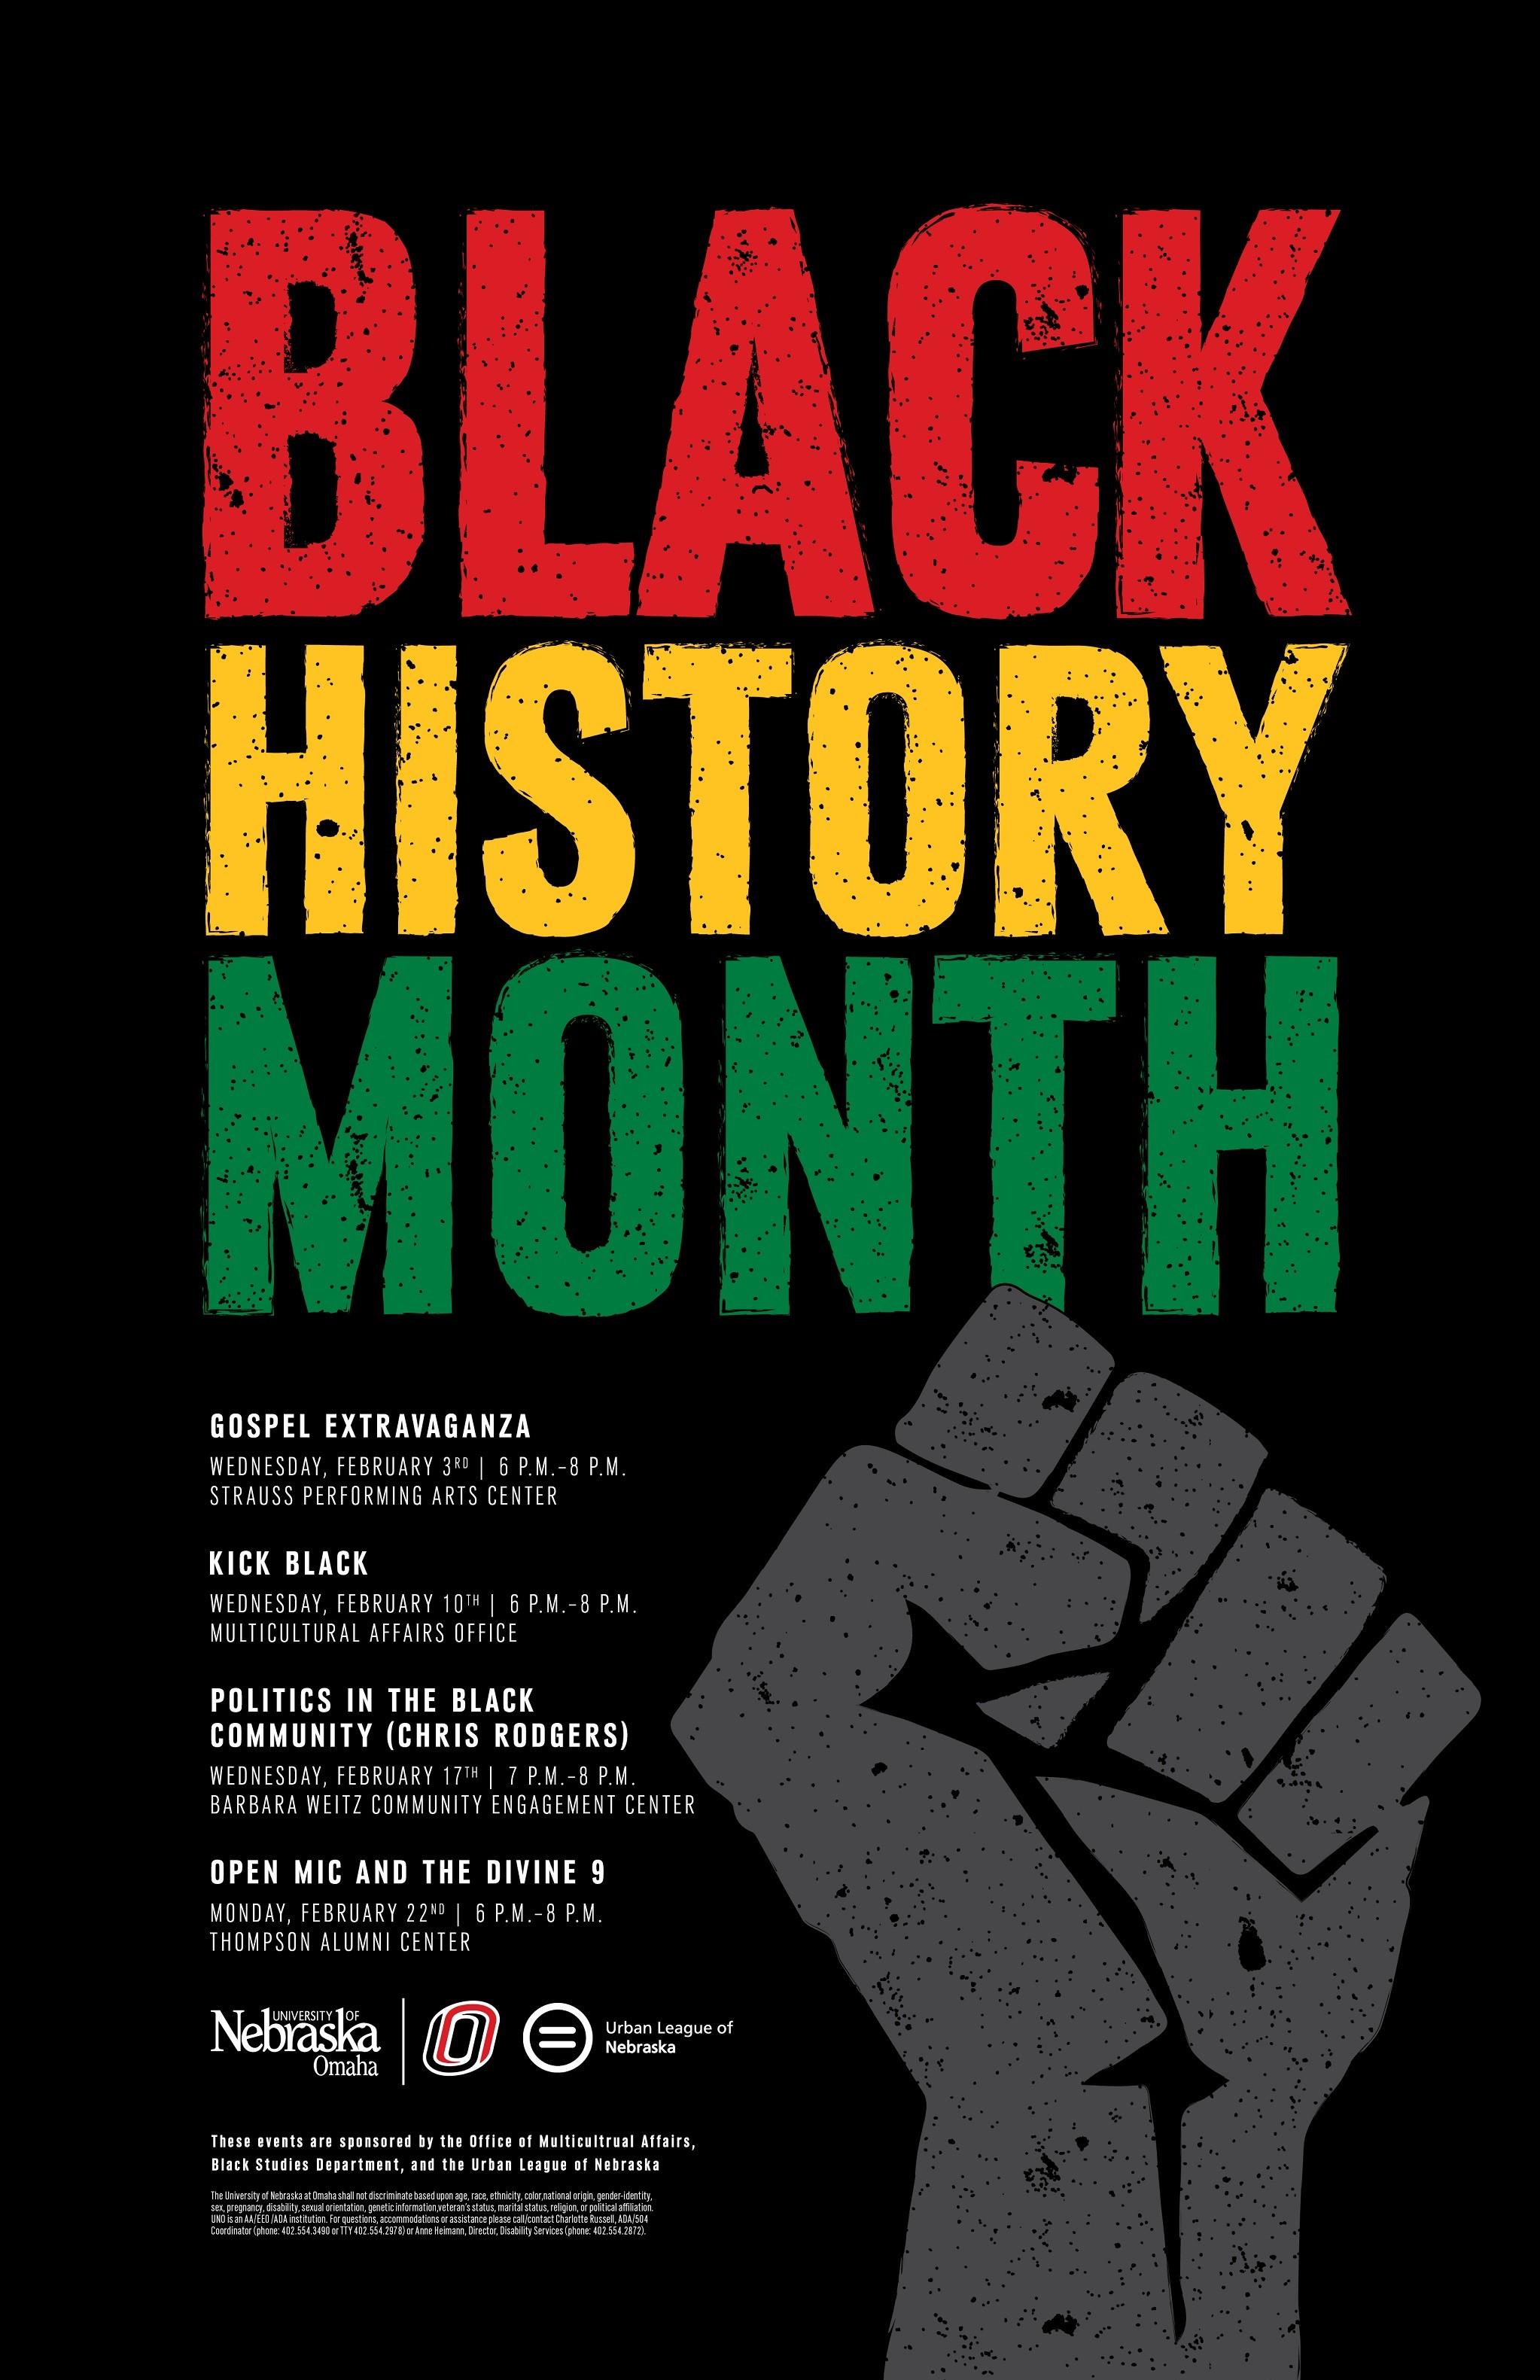 Black History Month Desktop Wallpapers Wallpaper Cave